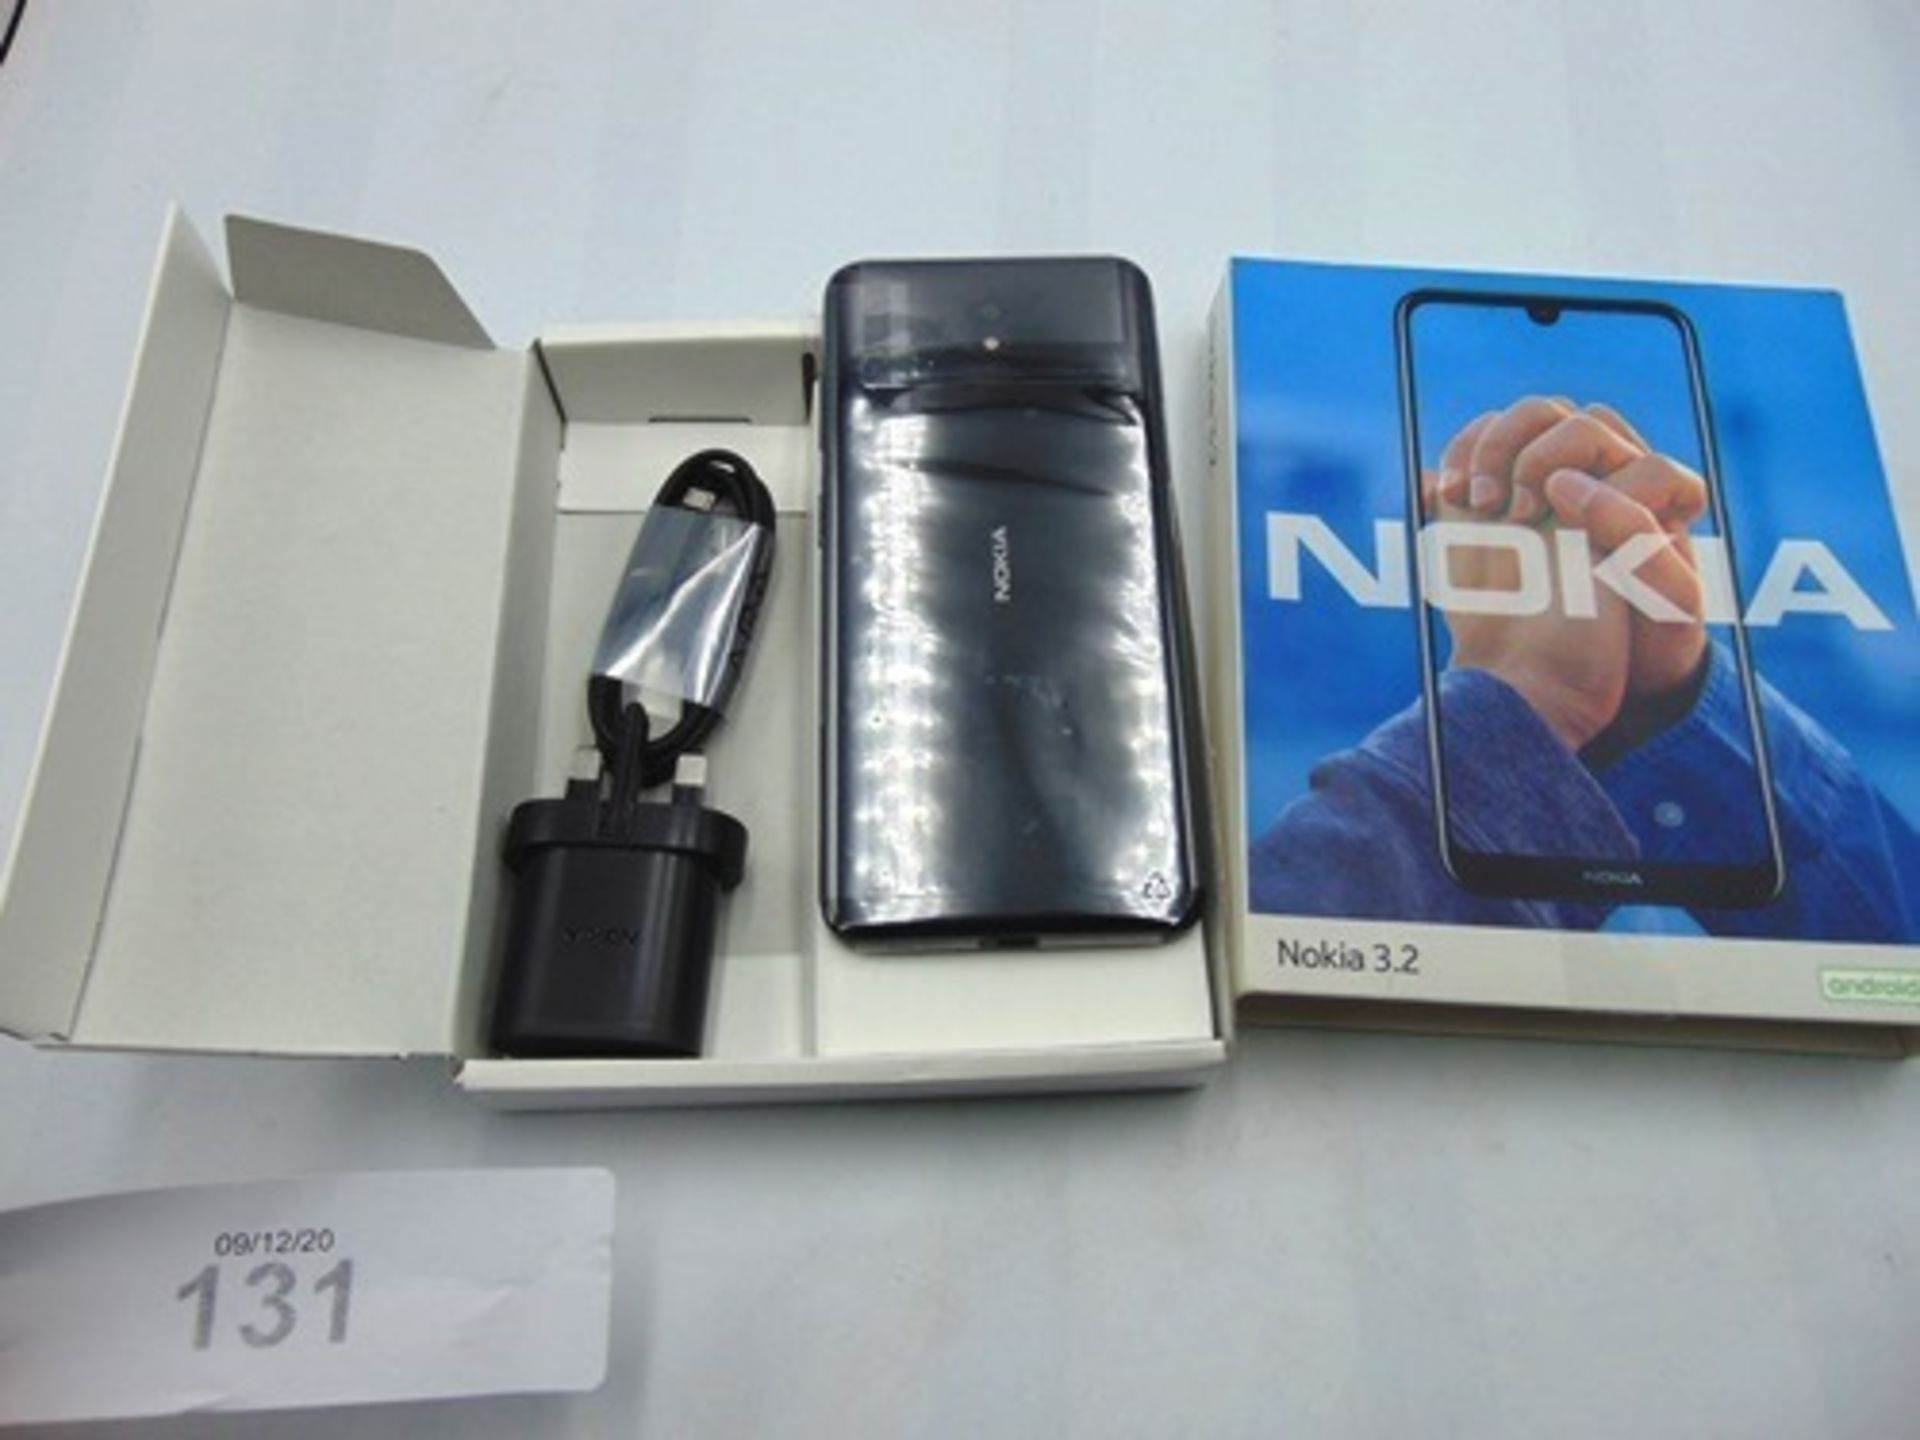 A black Nokia 3.2 smartphone, model TA-1156DS, 16gb, IMEI: 352907103166740 - New in box, box open. - Image 2 of 2